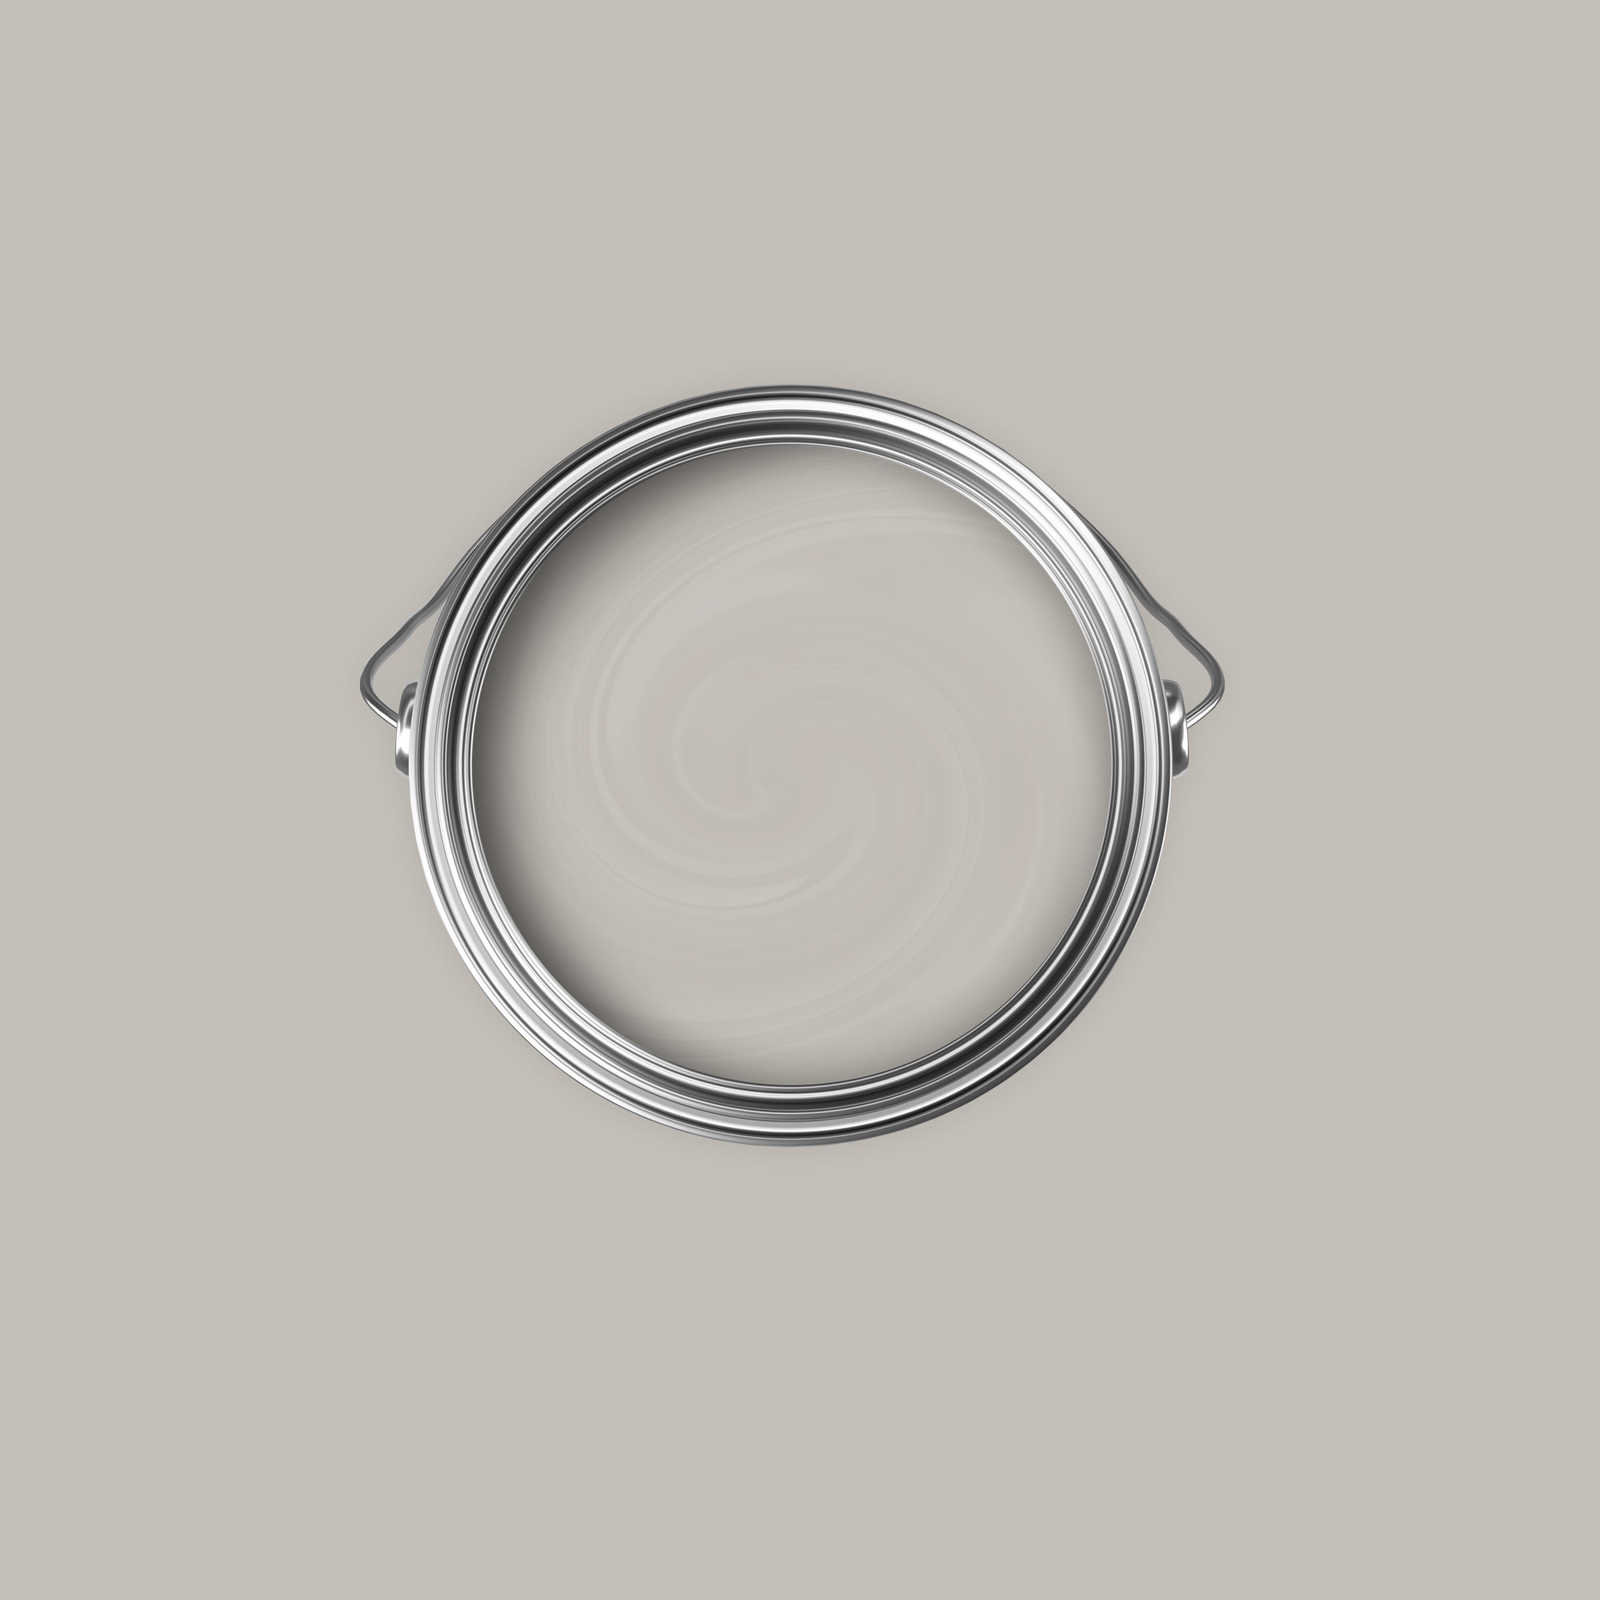             Premium Wandfarbe sanftes Seidengrau »Creamy Grey« NW111 – 2,5 Liter
        